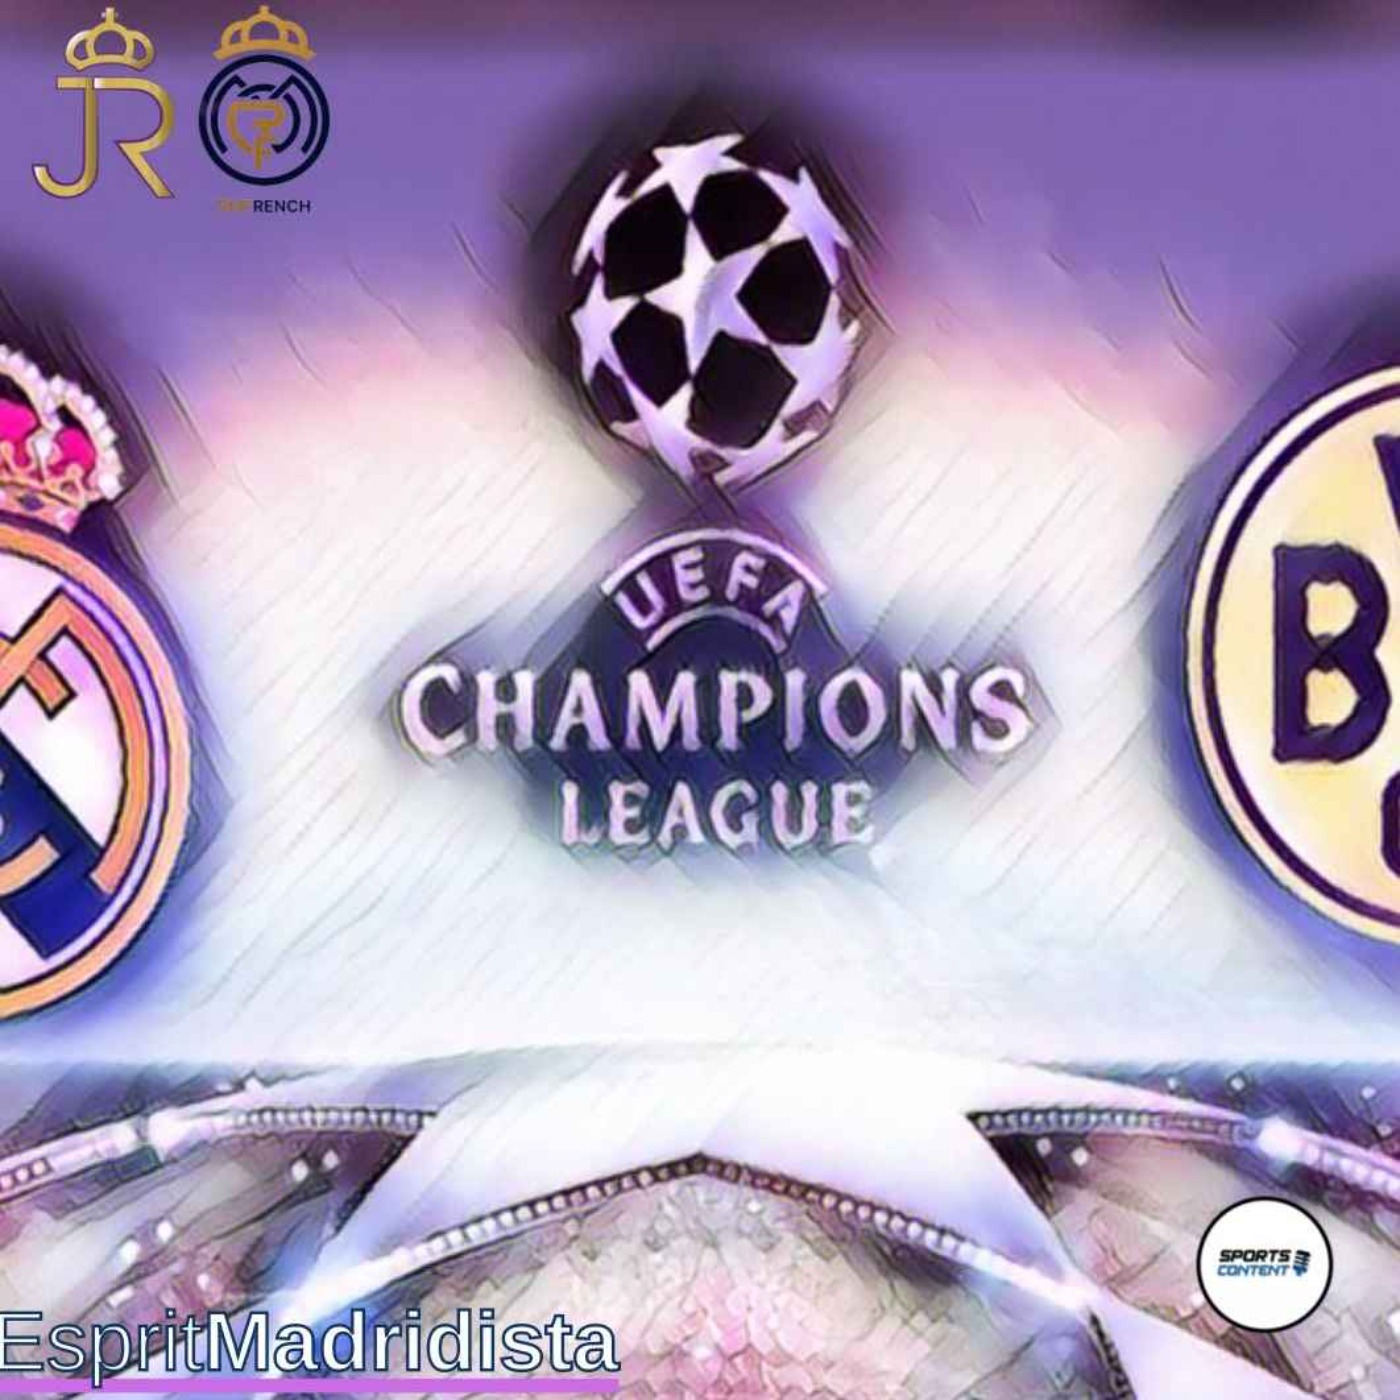 Nos souvenirs de Real Madrid / BVB Dortmund en Ligue des Champions !